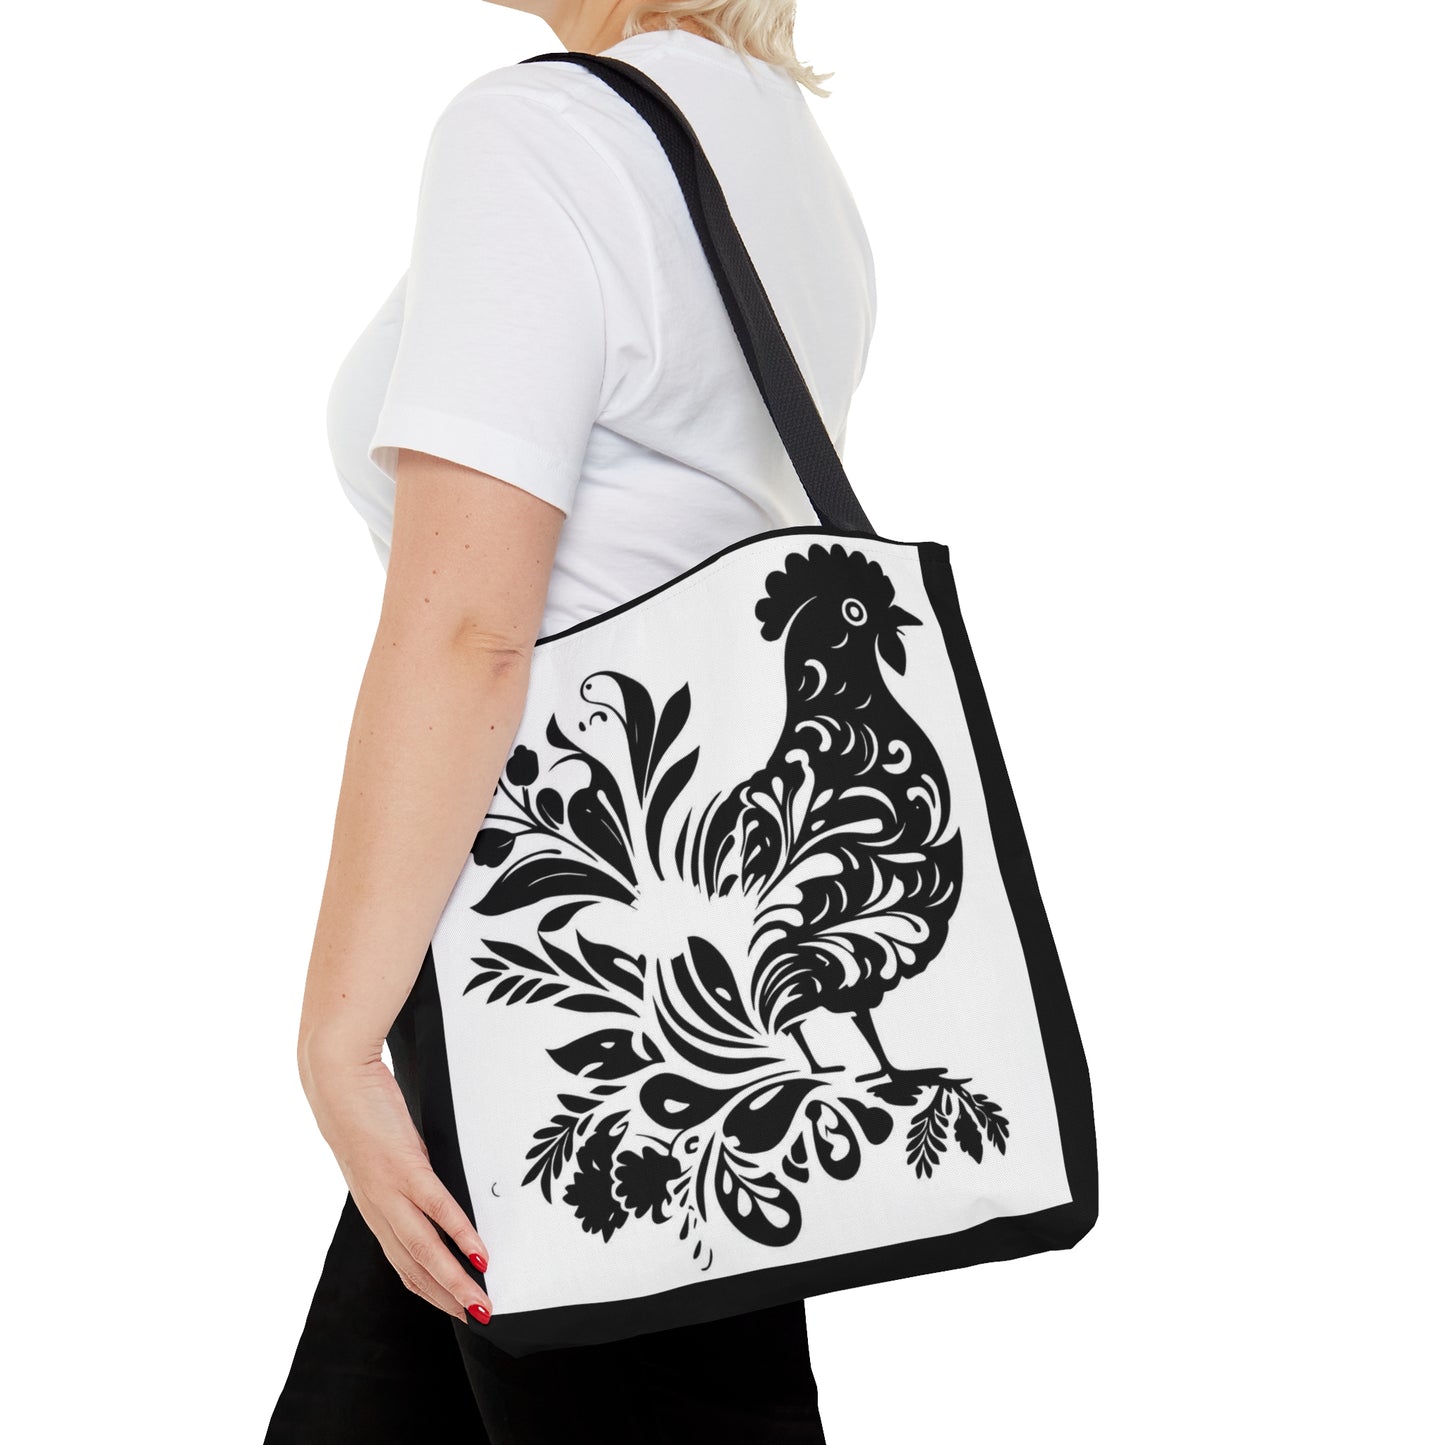 Flowered Chicken Black/White Tote Bag